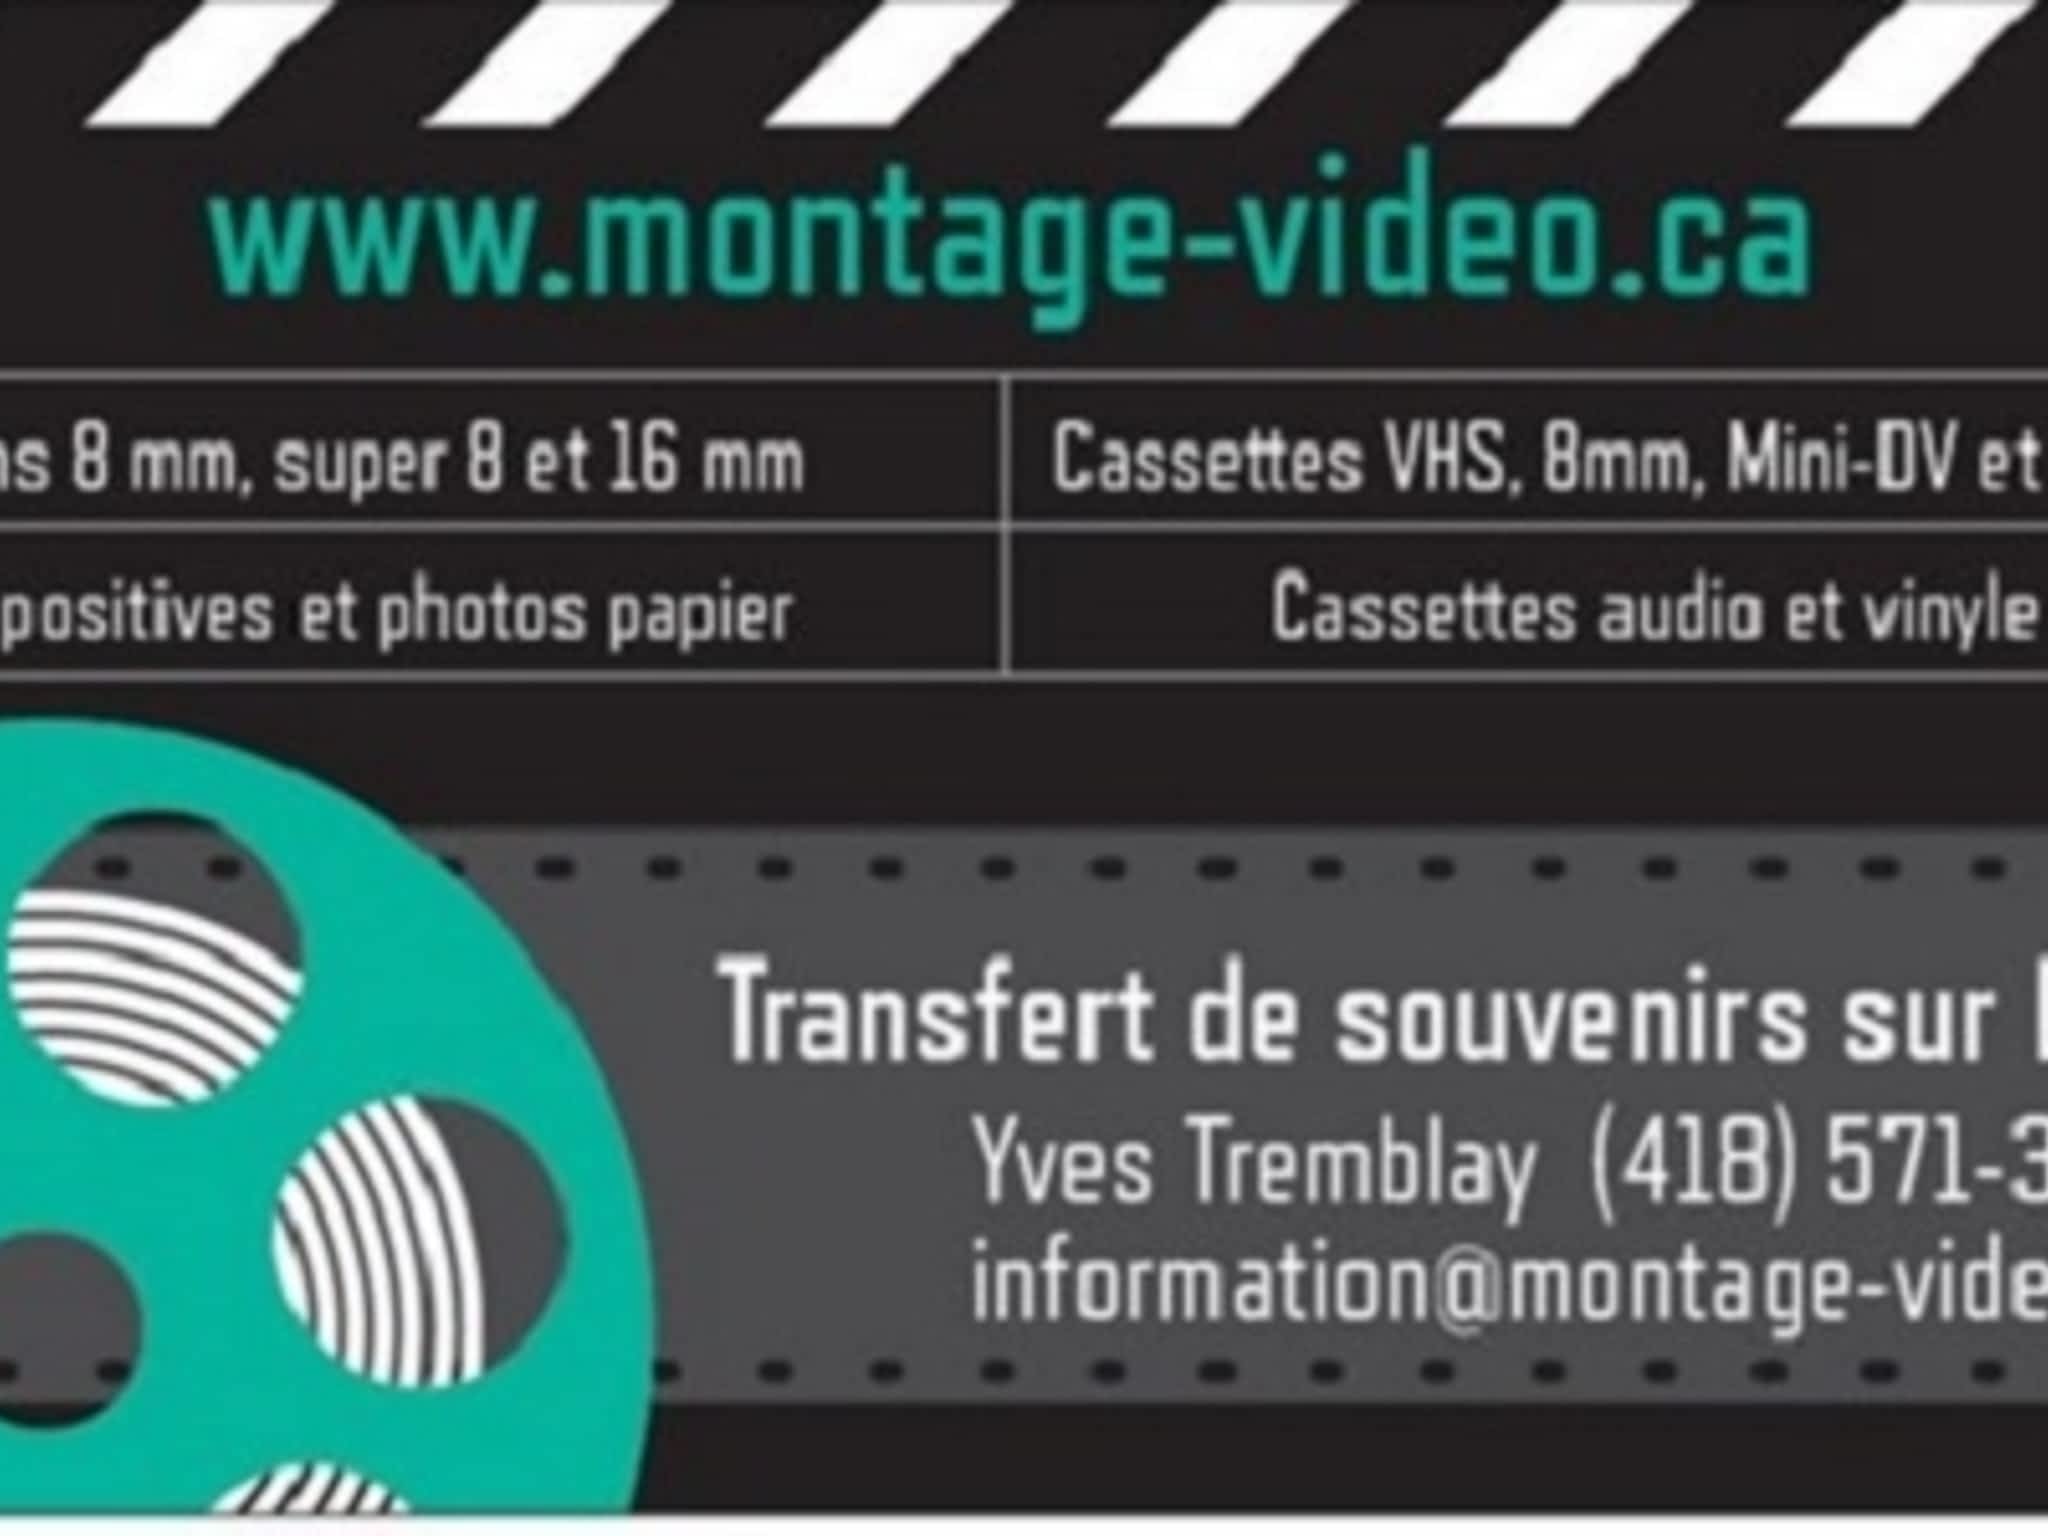 photo Montage-video.ca